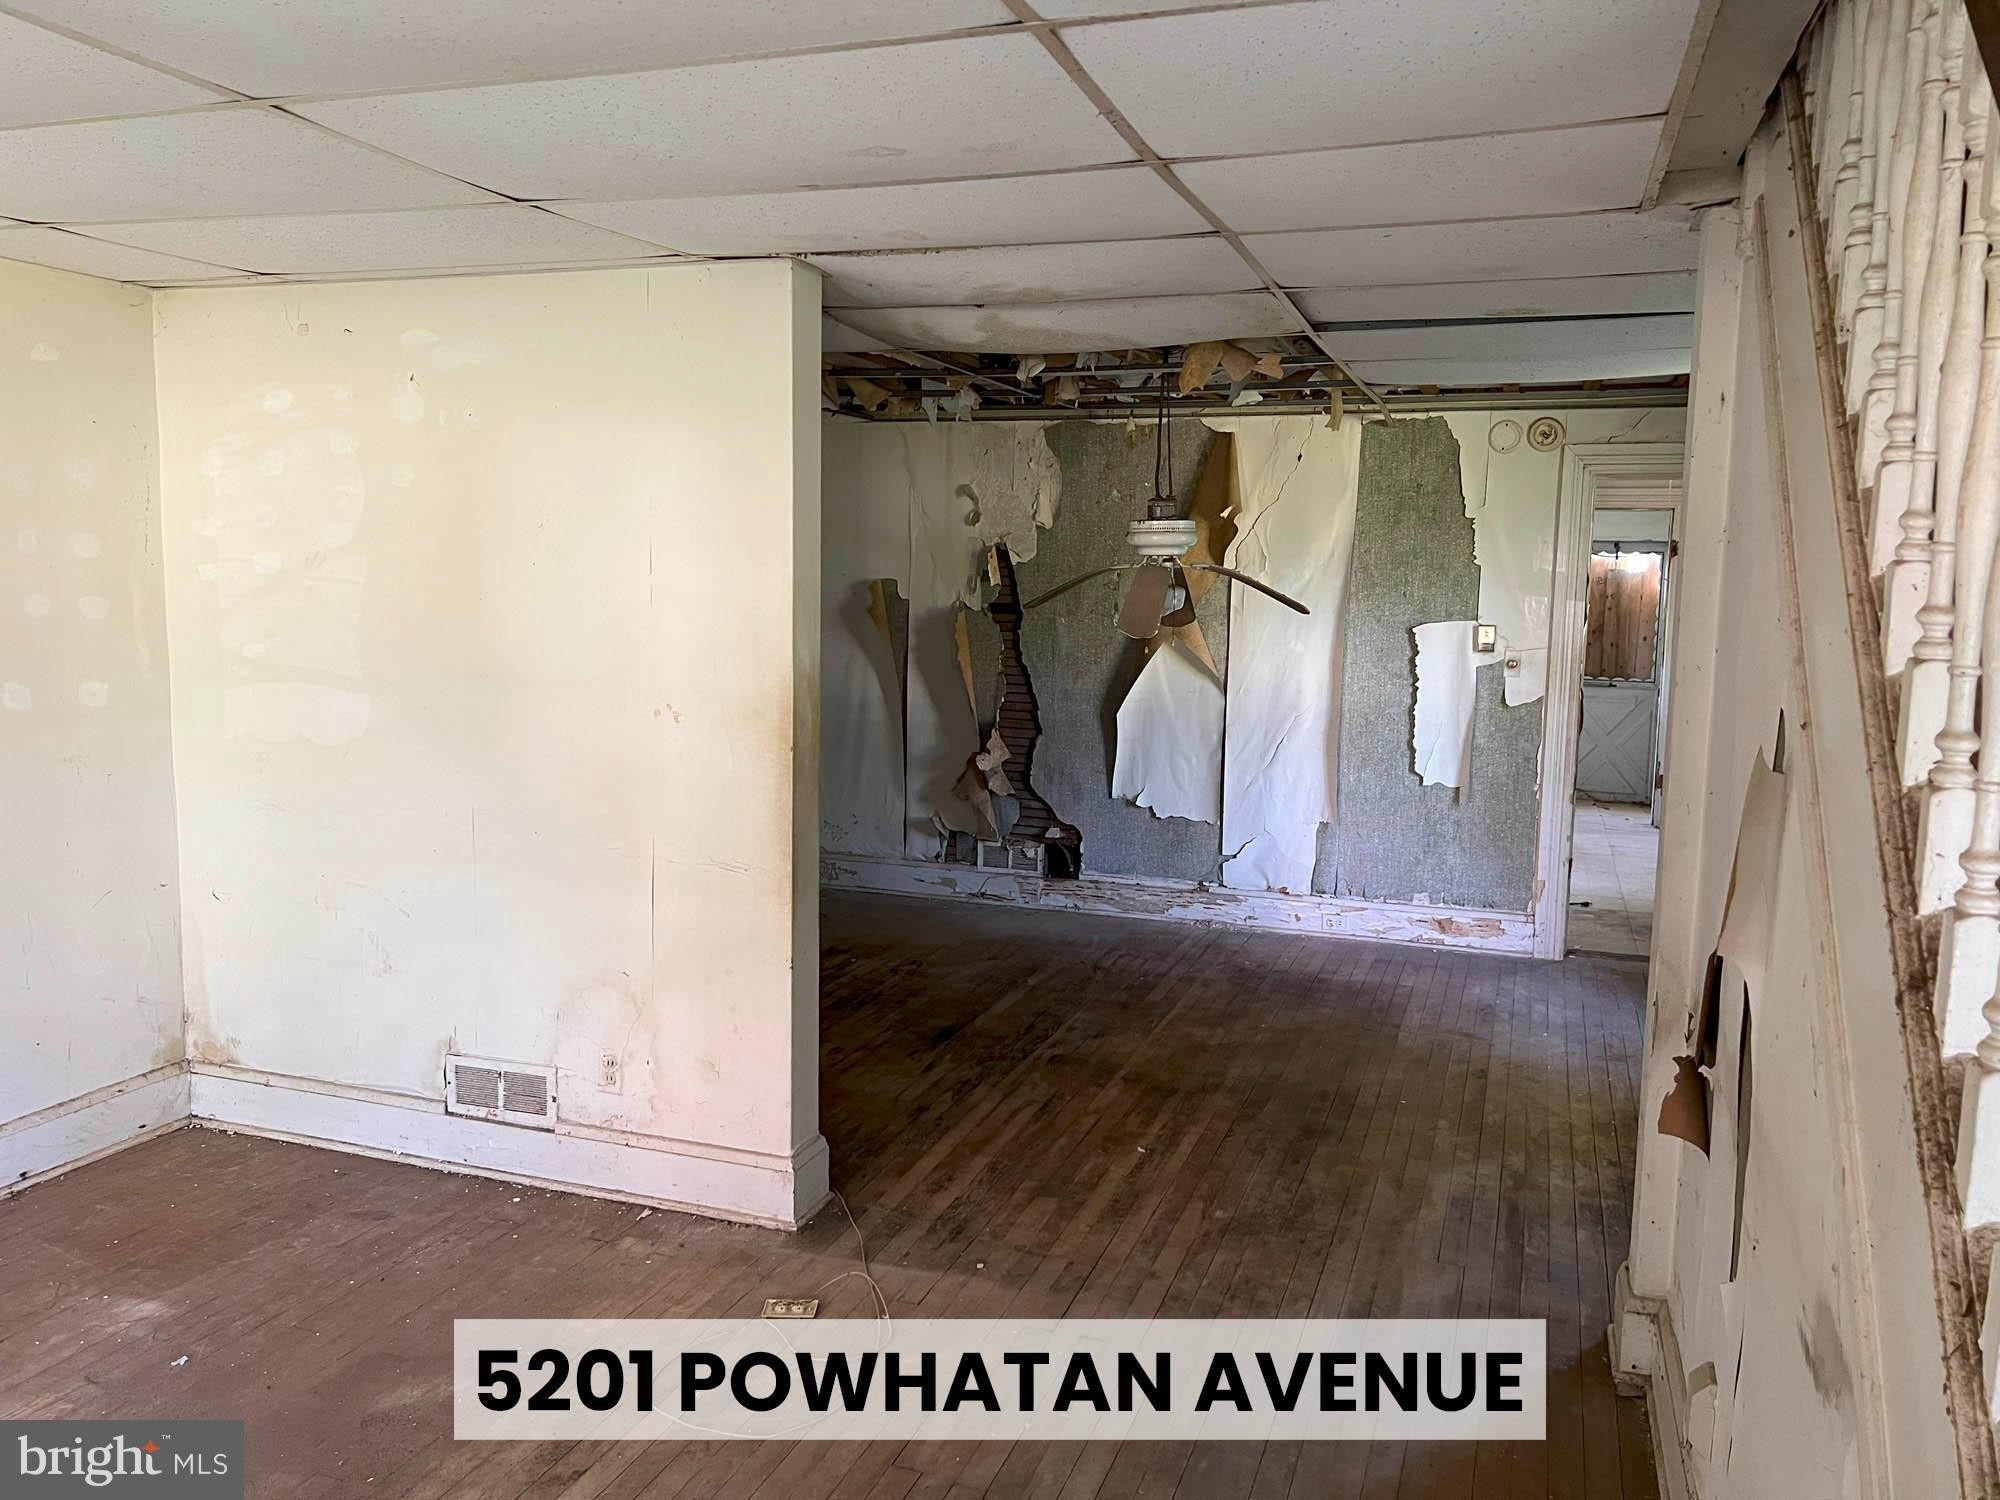 4. 5201 Powhatan Avenue